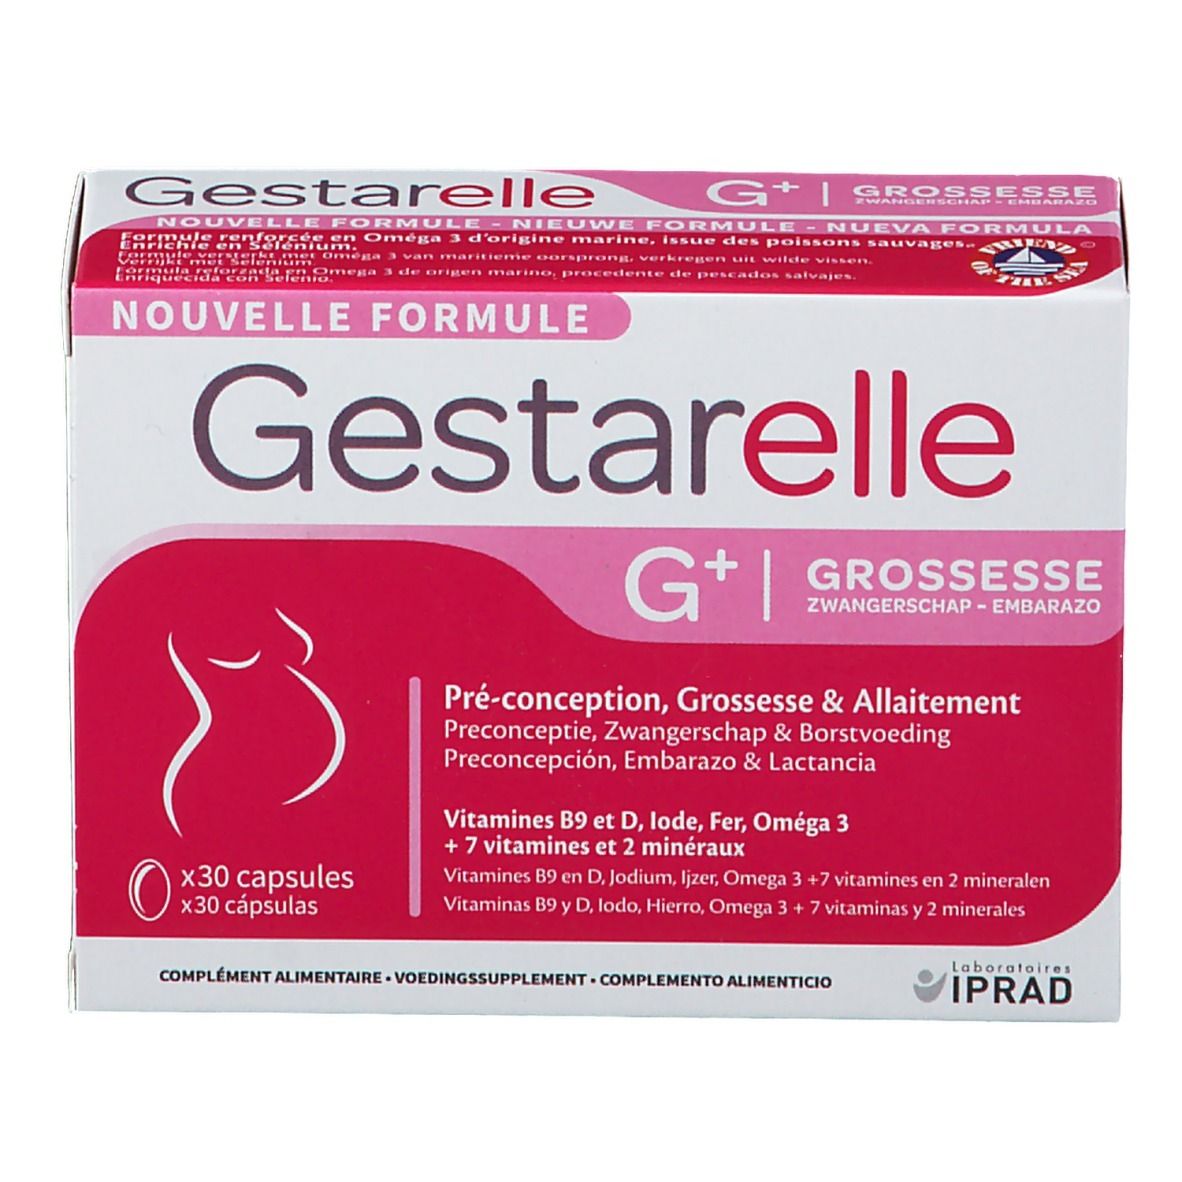 Parapharmacie Chiraz - GESTARELLE G GROSSESSE 30 CAPSULES